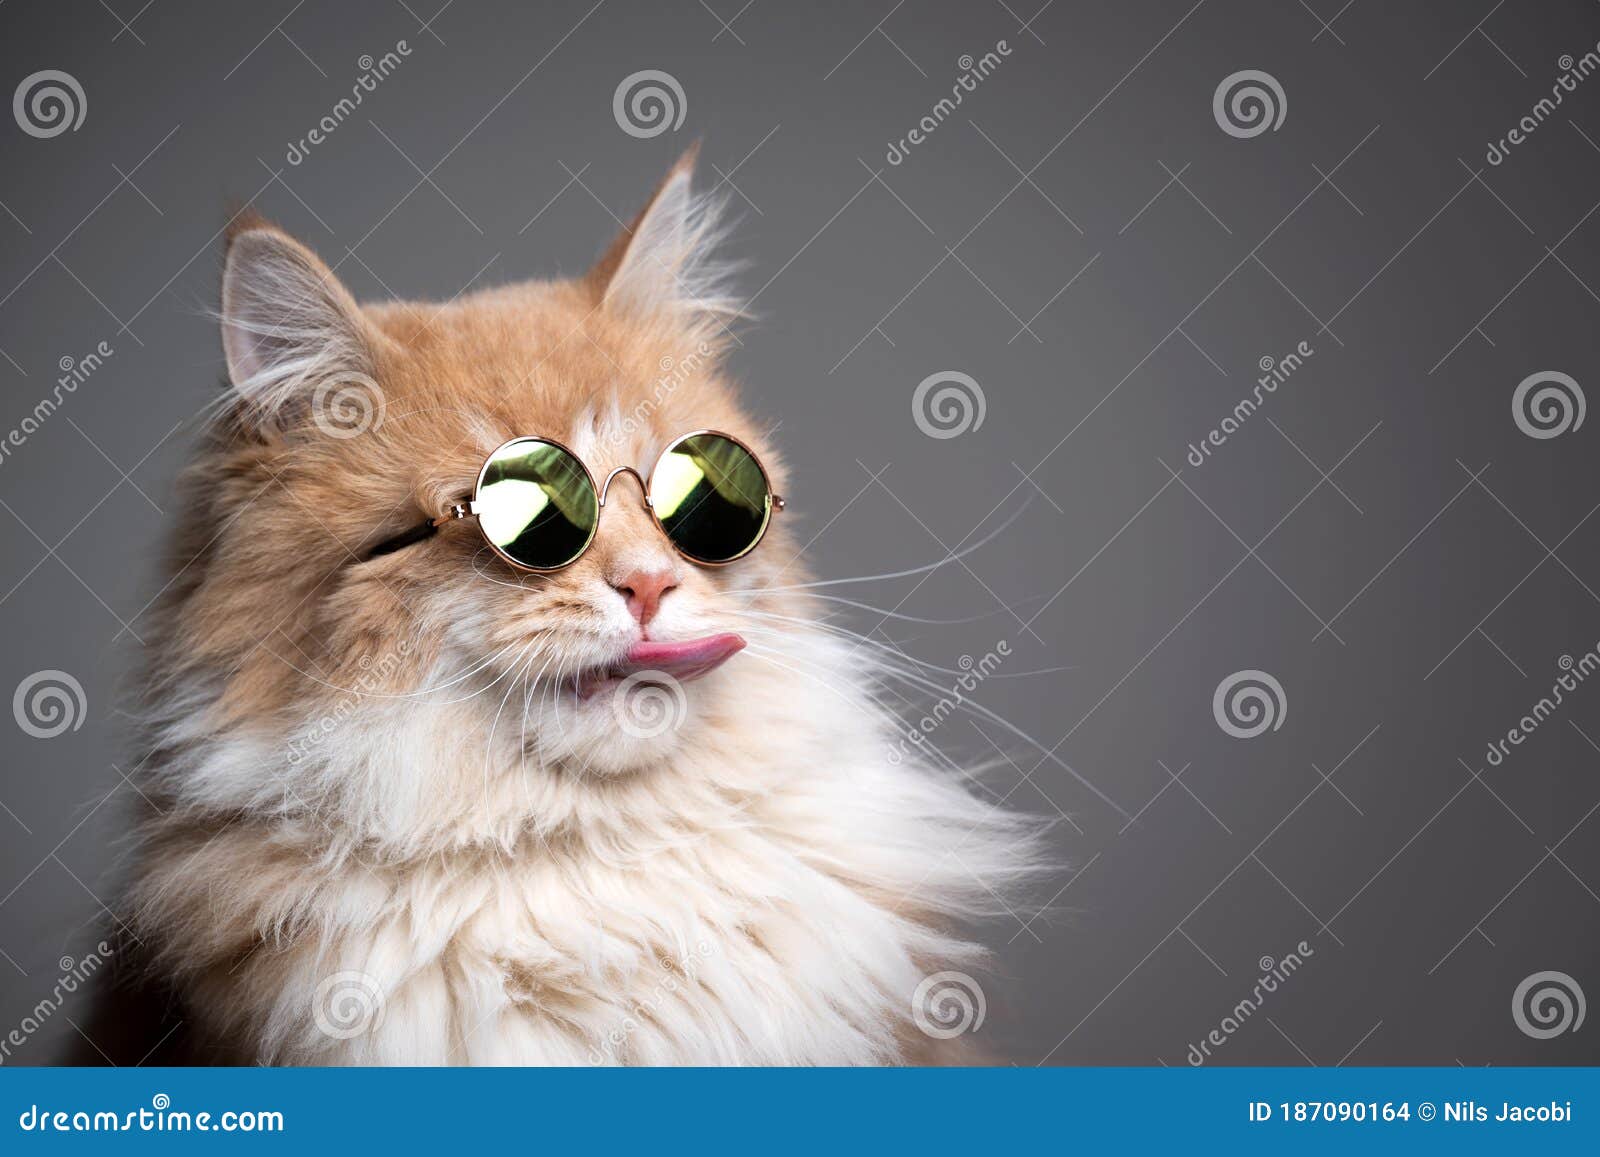 Wearing sunglasses like a Superstar ✨ #cat #sunglasses #foryou | TikTok